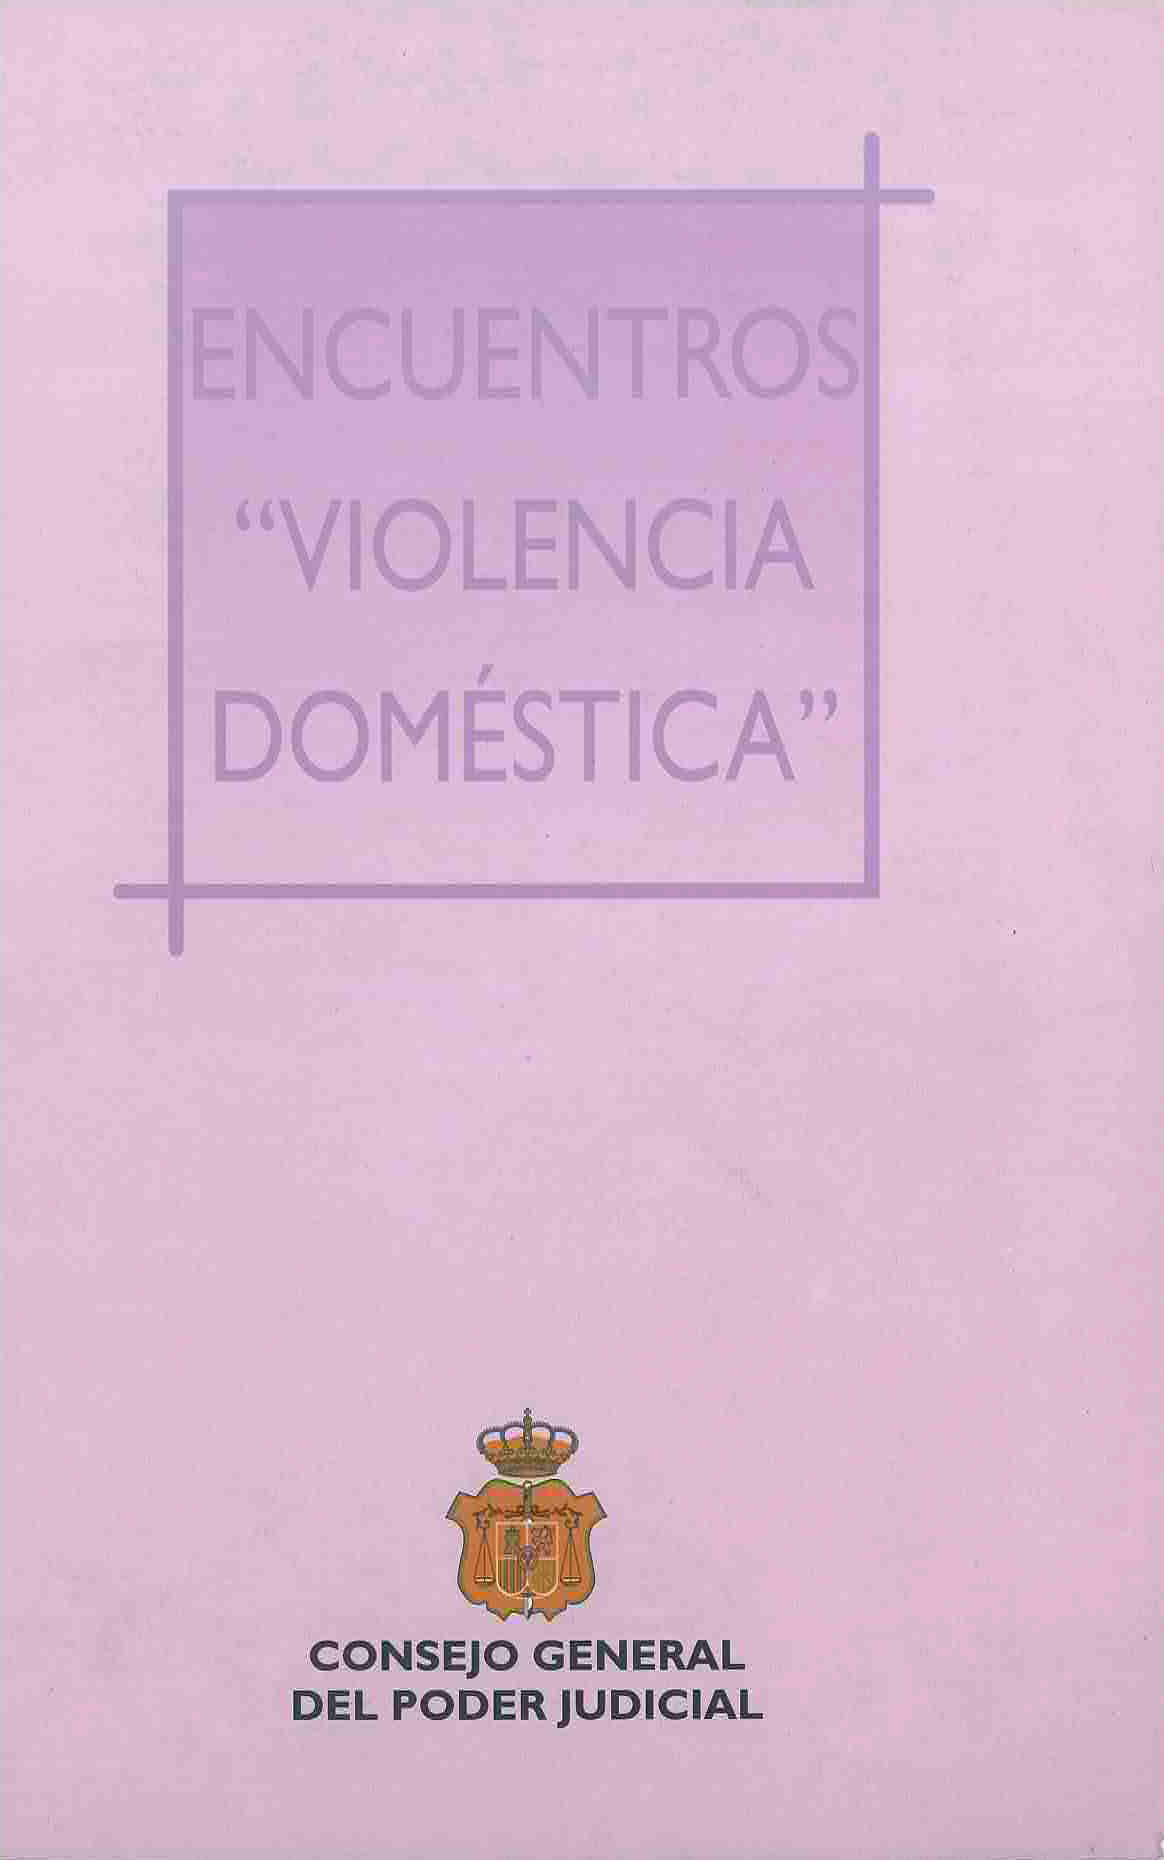 Encuentros "violencia doméstica"